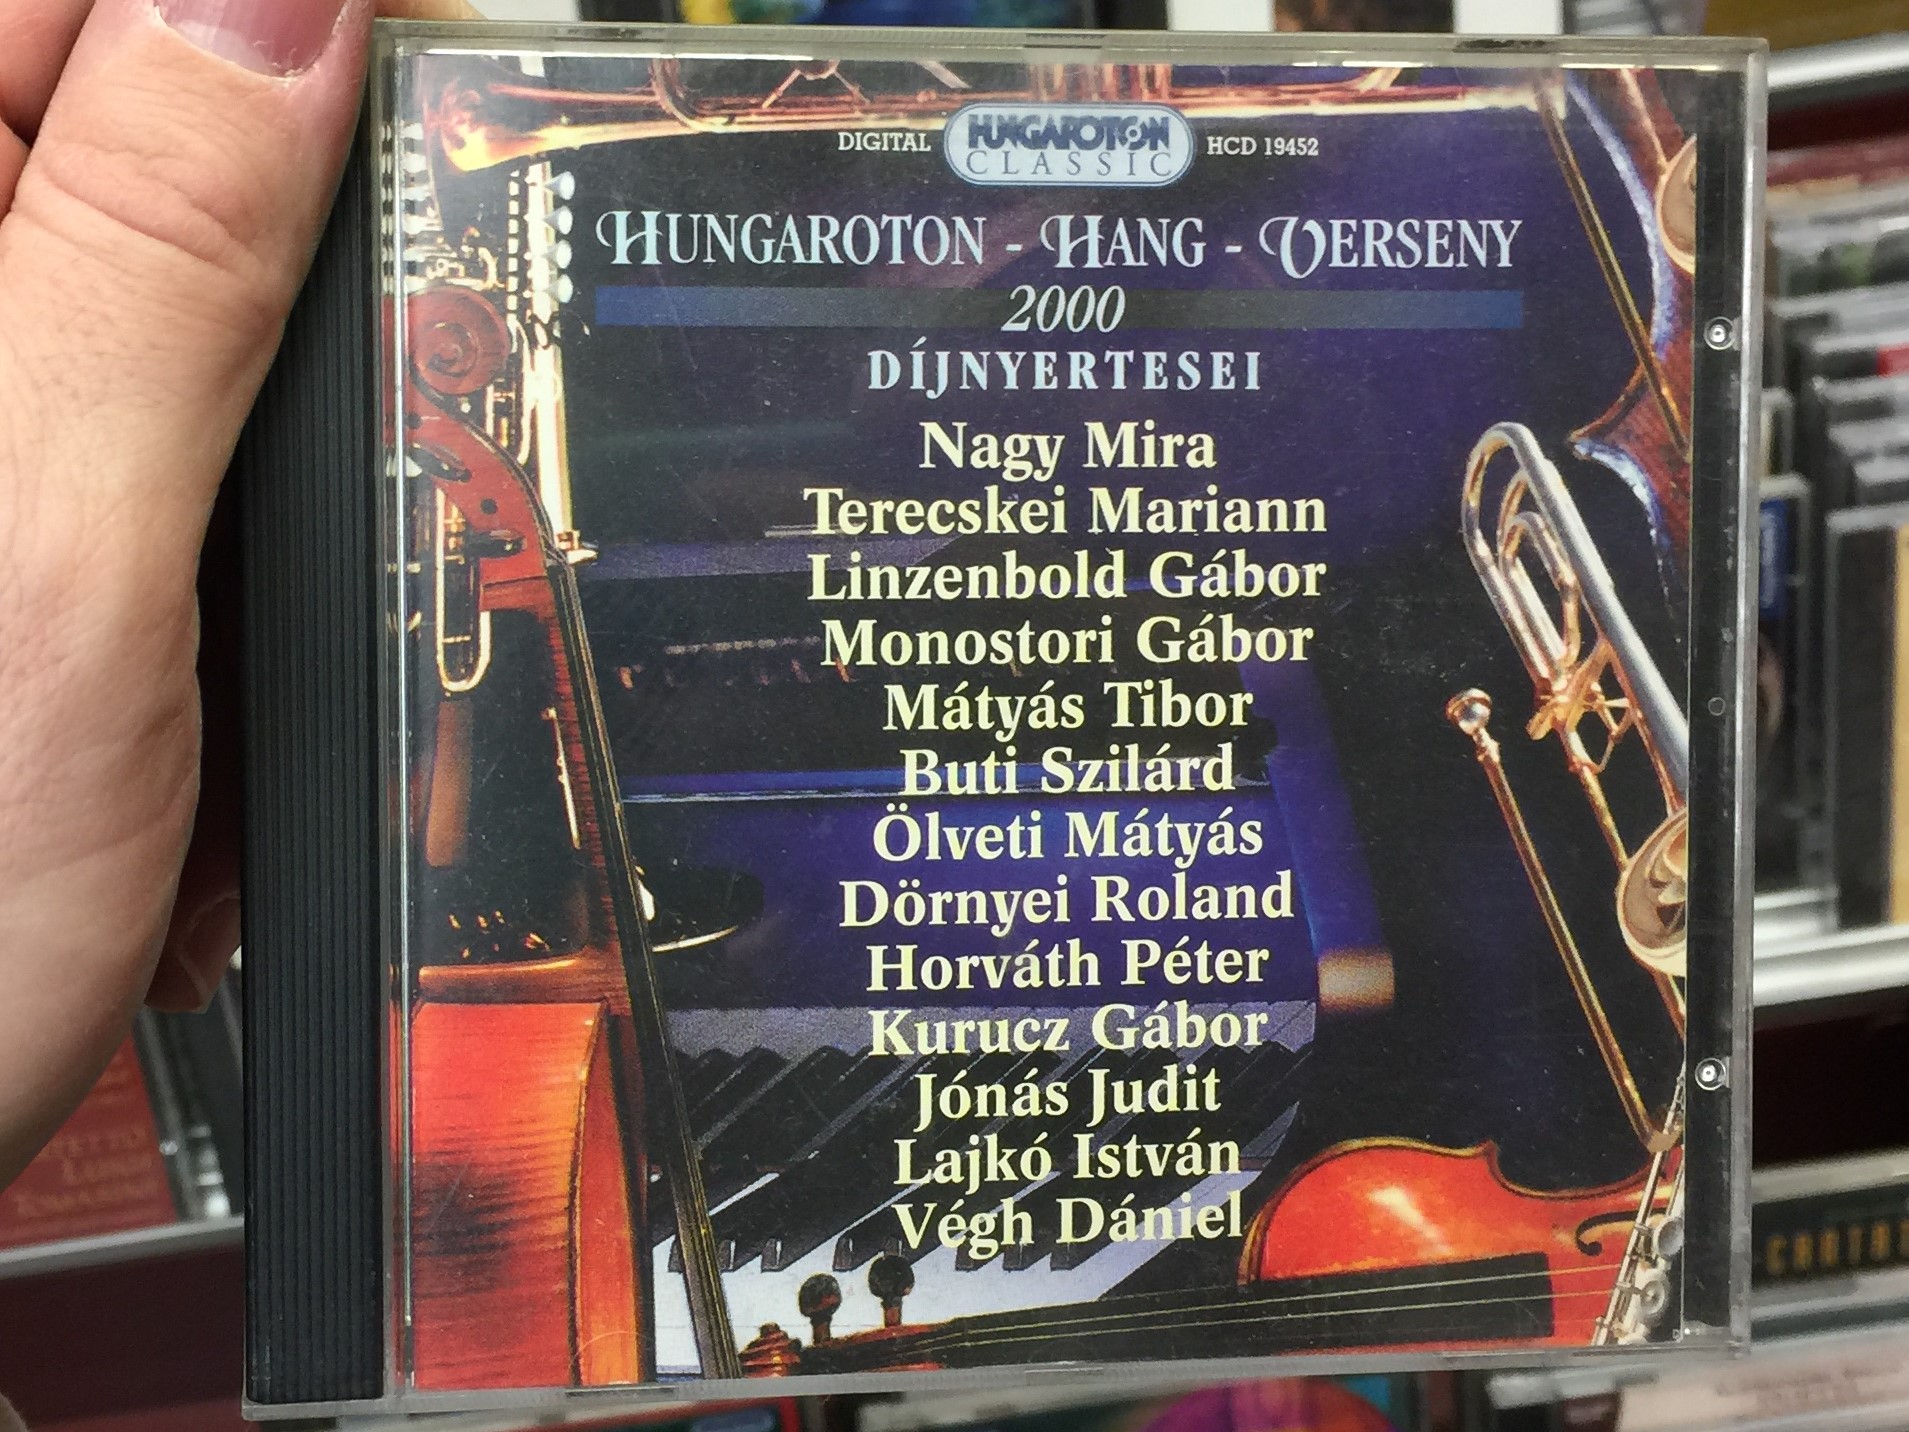 hungaroton-hang-verseny-2000-dijnyertesei-nagy-mira-terecskei-mariann-linzenbold-gabor-monostori-gabor-matyas-tibor-buti-szilard-kurucz-gabor-lajko-istvan-hungaroton-classic-audio-cd-2-1-.jpg